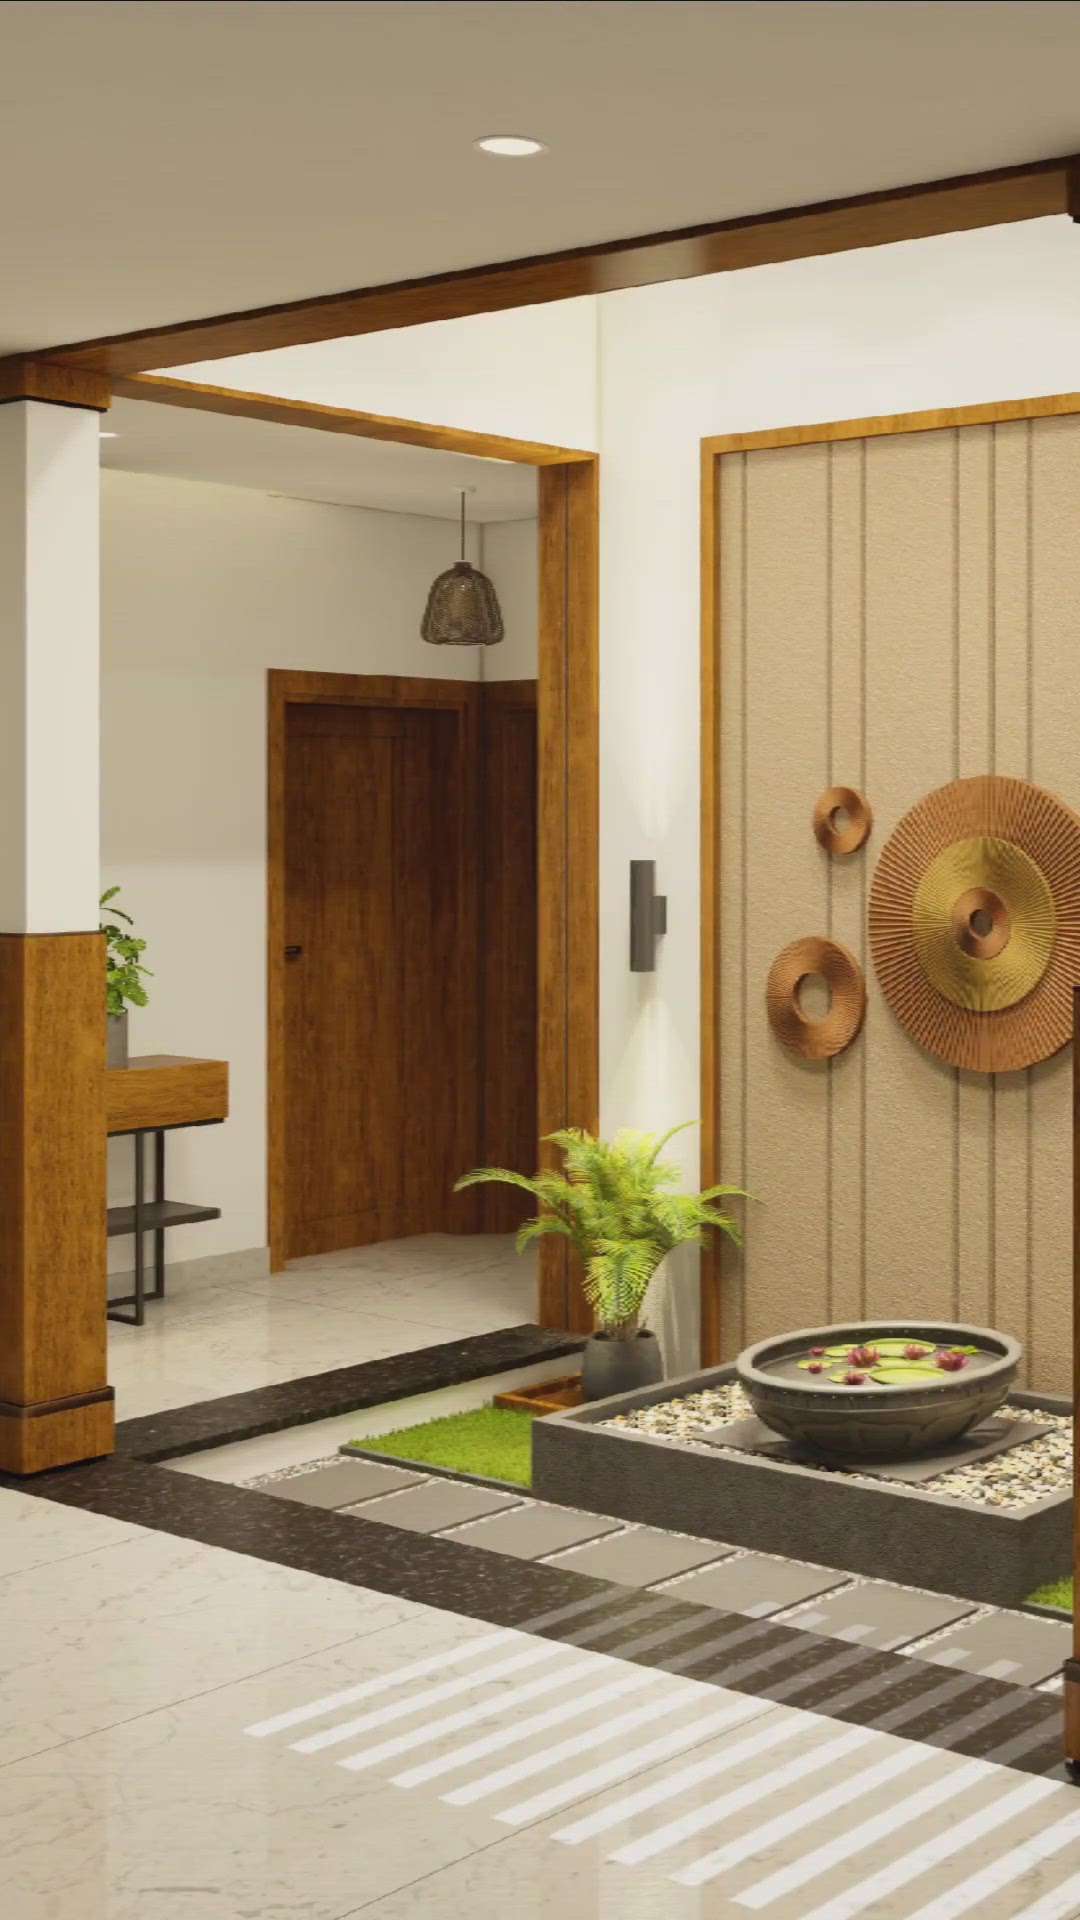 Residence Interior for Jai Properties
Design : Salt
Location : Kollam


#Kollam  #Kerala #interiordesign #residenceinterior #3Dinterior #HouseDesigns #Architect #spatialux #saltdesigns designs #ContemporaryHouse #ContemporaryDesigns #moderndesign #architecturedesigns #architecture